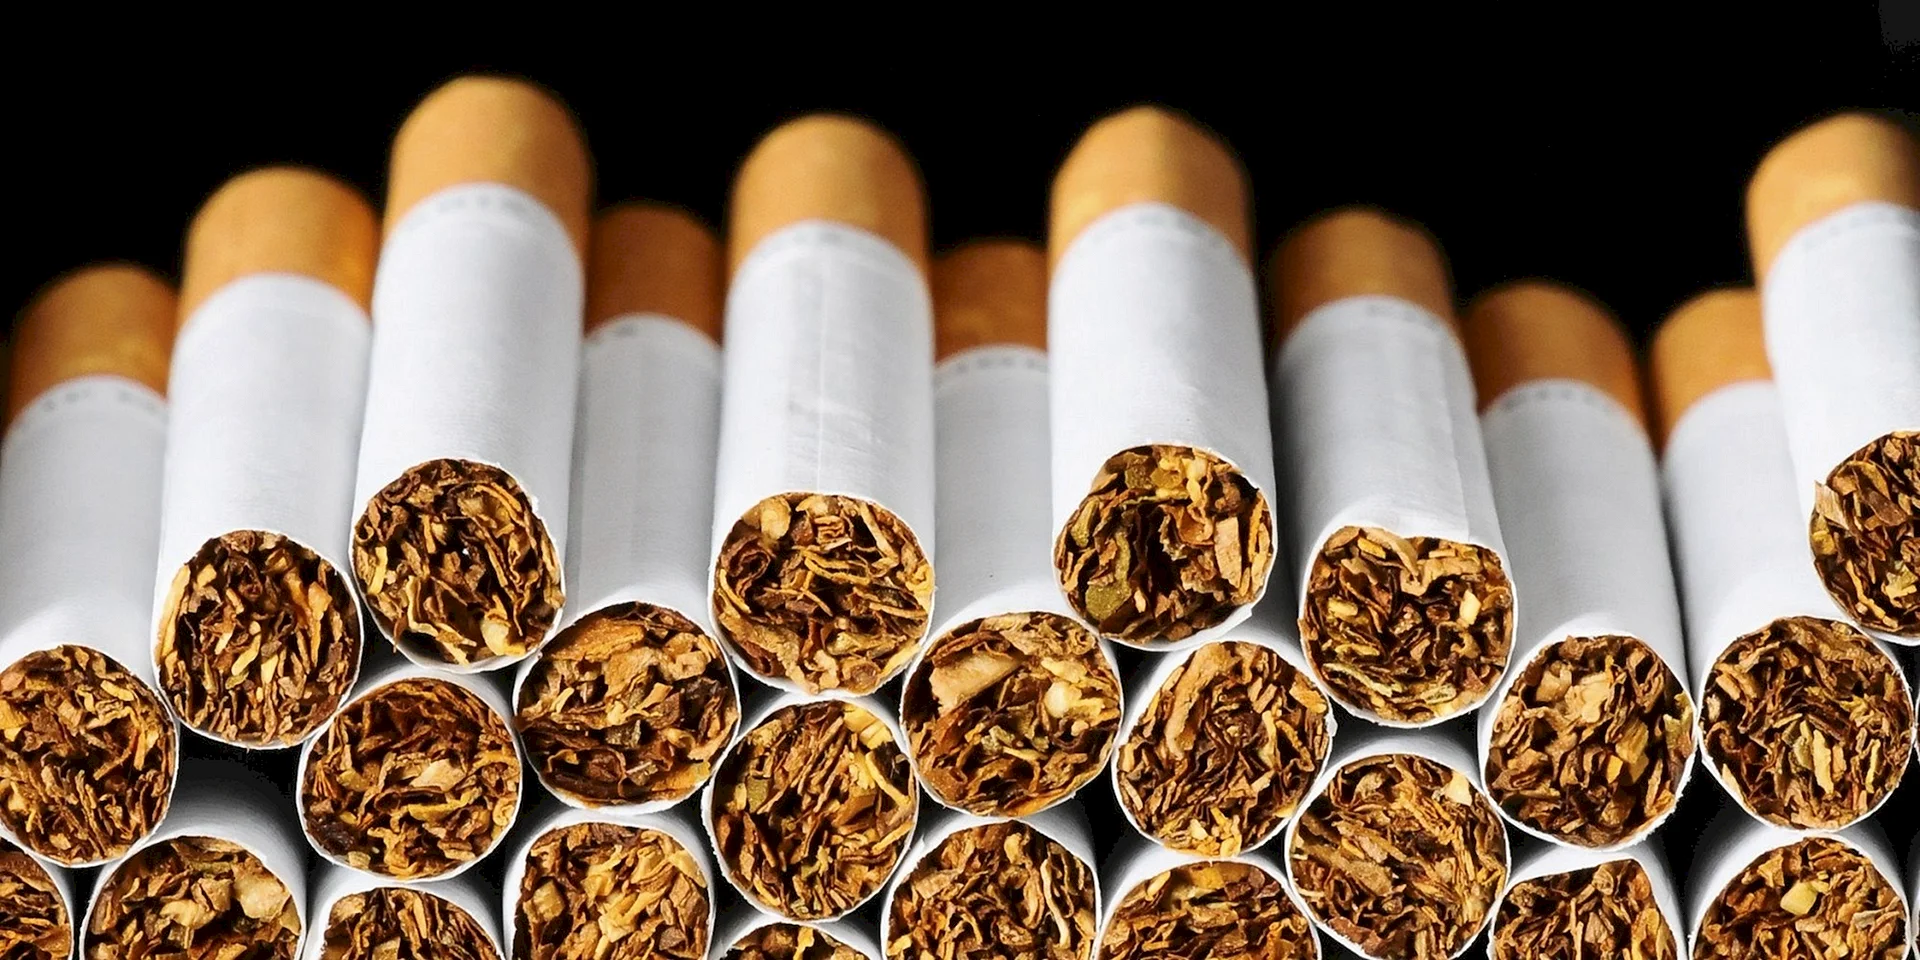 Табак для сигарет